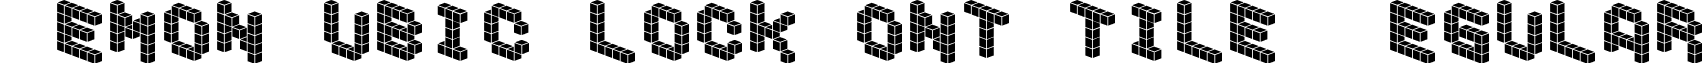 DemonCubicBlockFont Tile Regular font - cubicblock_t.ttf